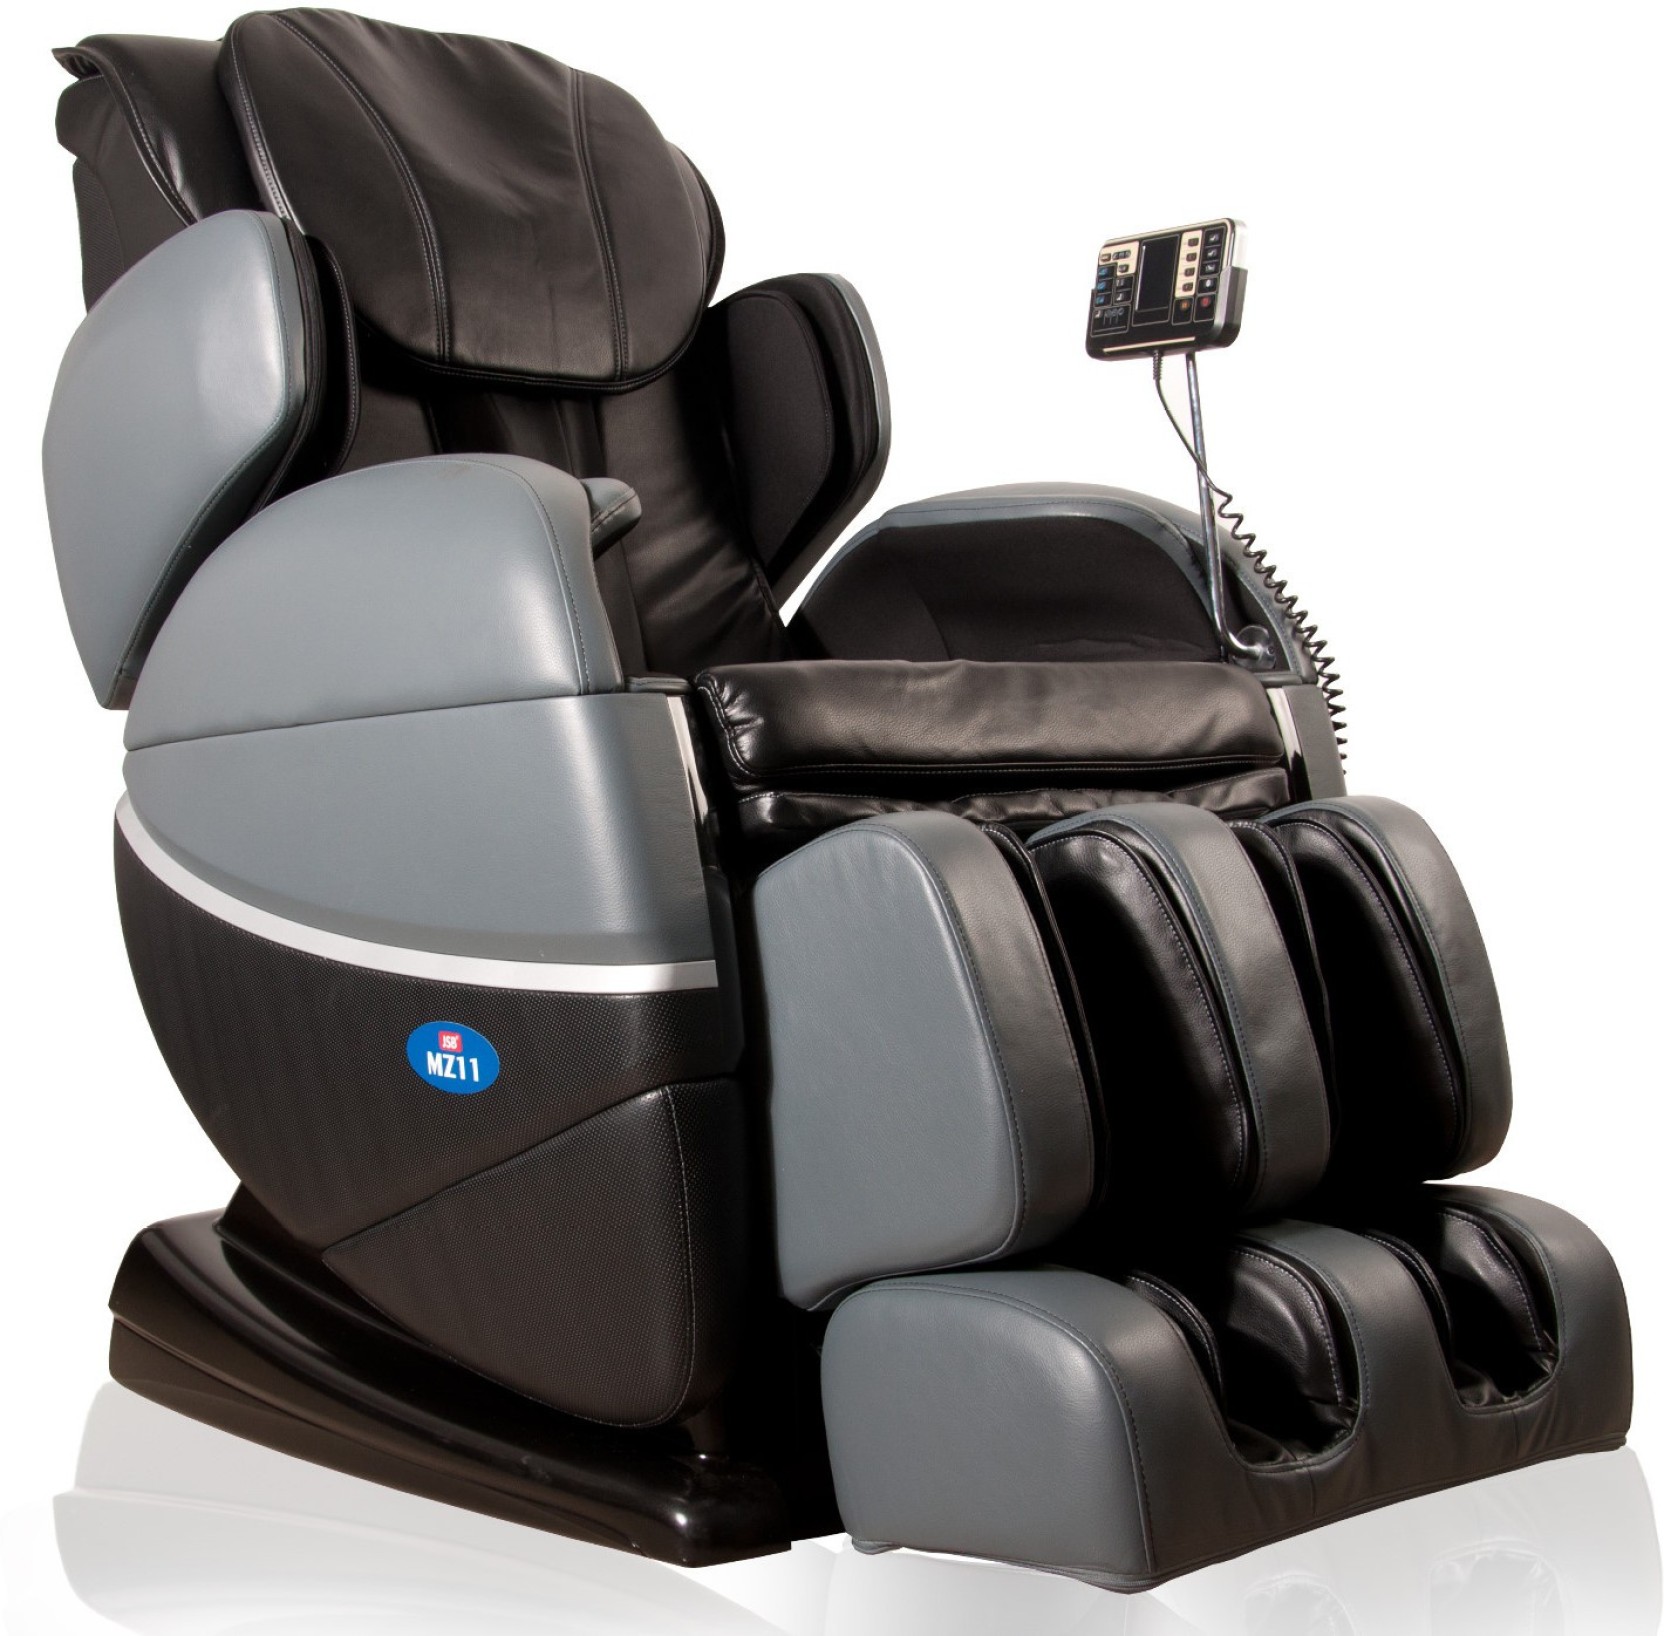 Full Body Massager Chair - Slabway Full Body Massage Chair / It